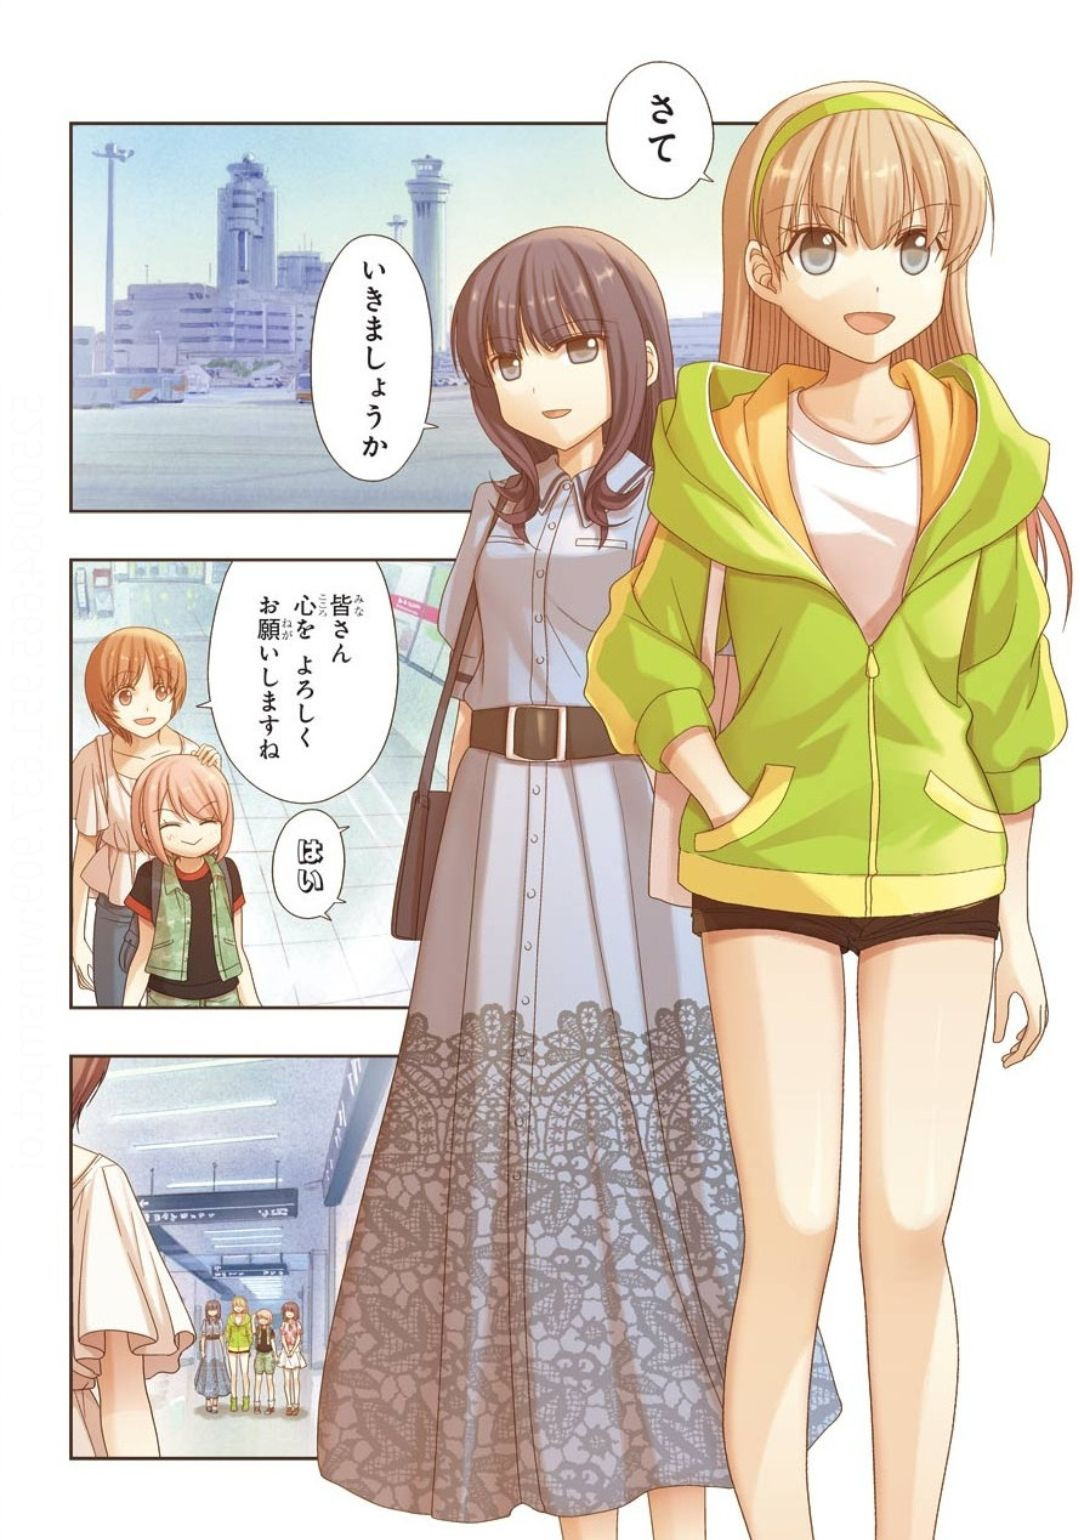 Shinohayu - The Dawn of Age Manga - Chapter 081 - Page 3